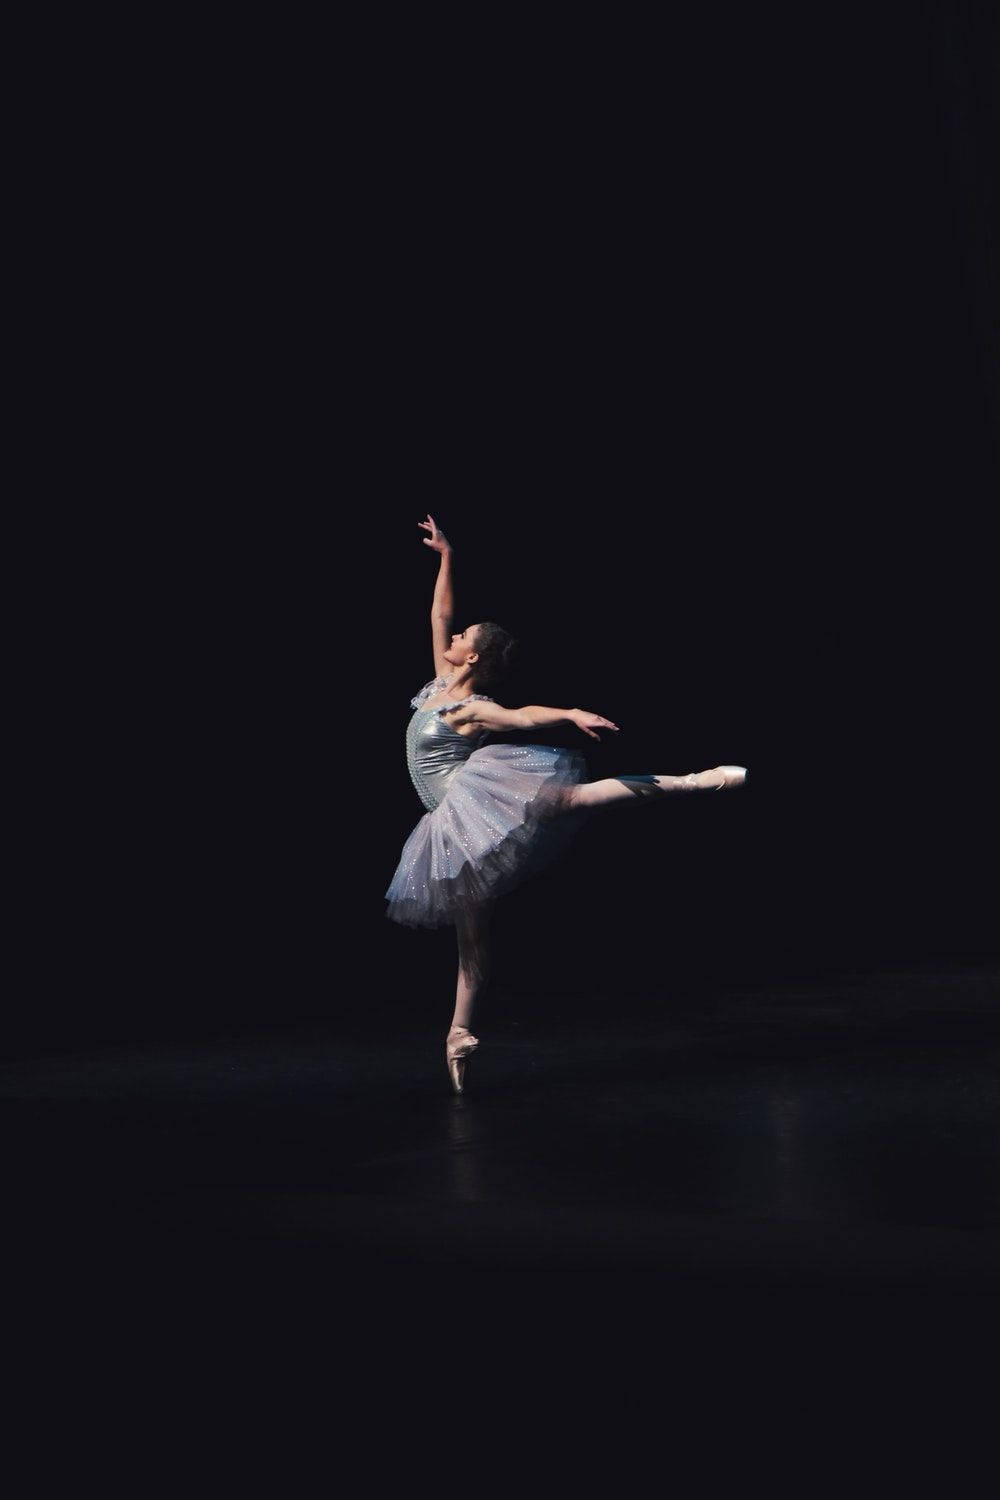 Breathtaking Ballet Dance Performance Background